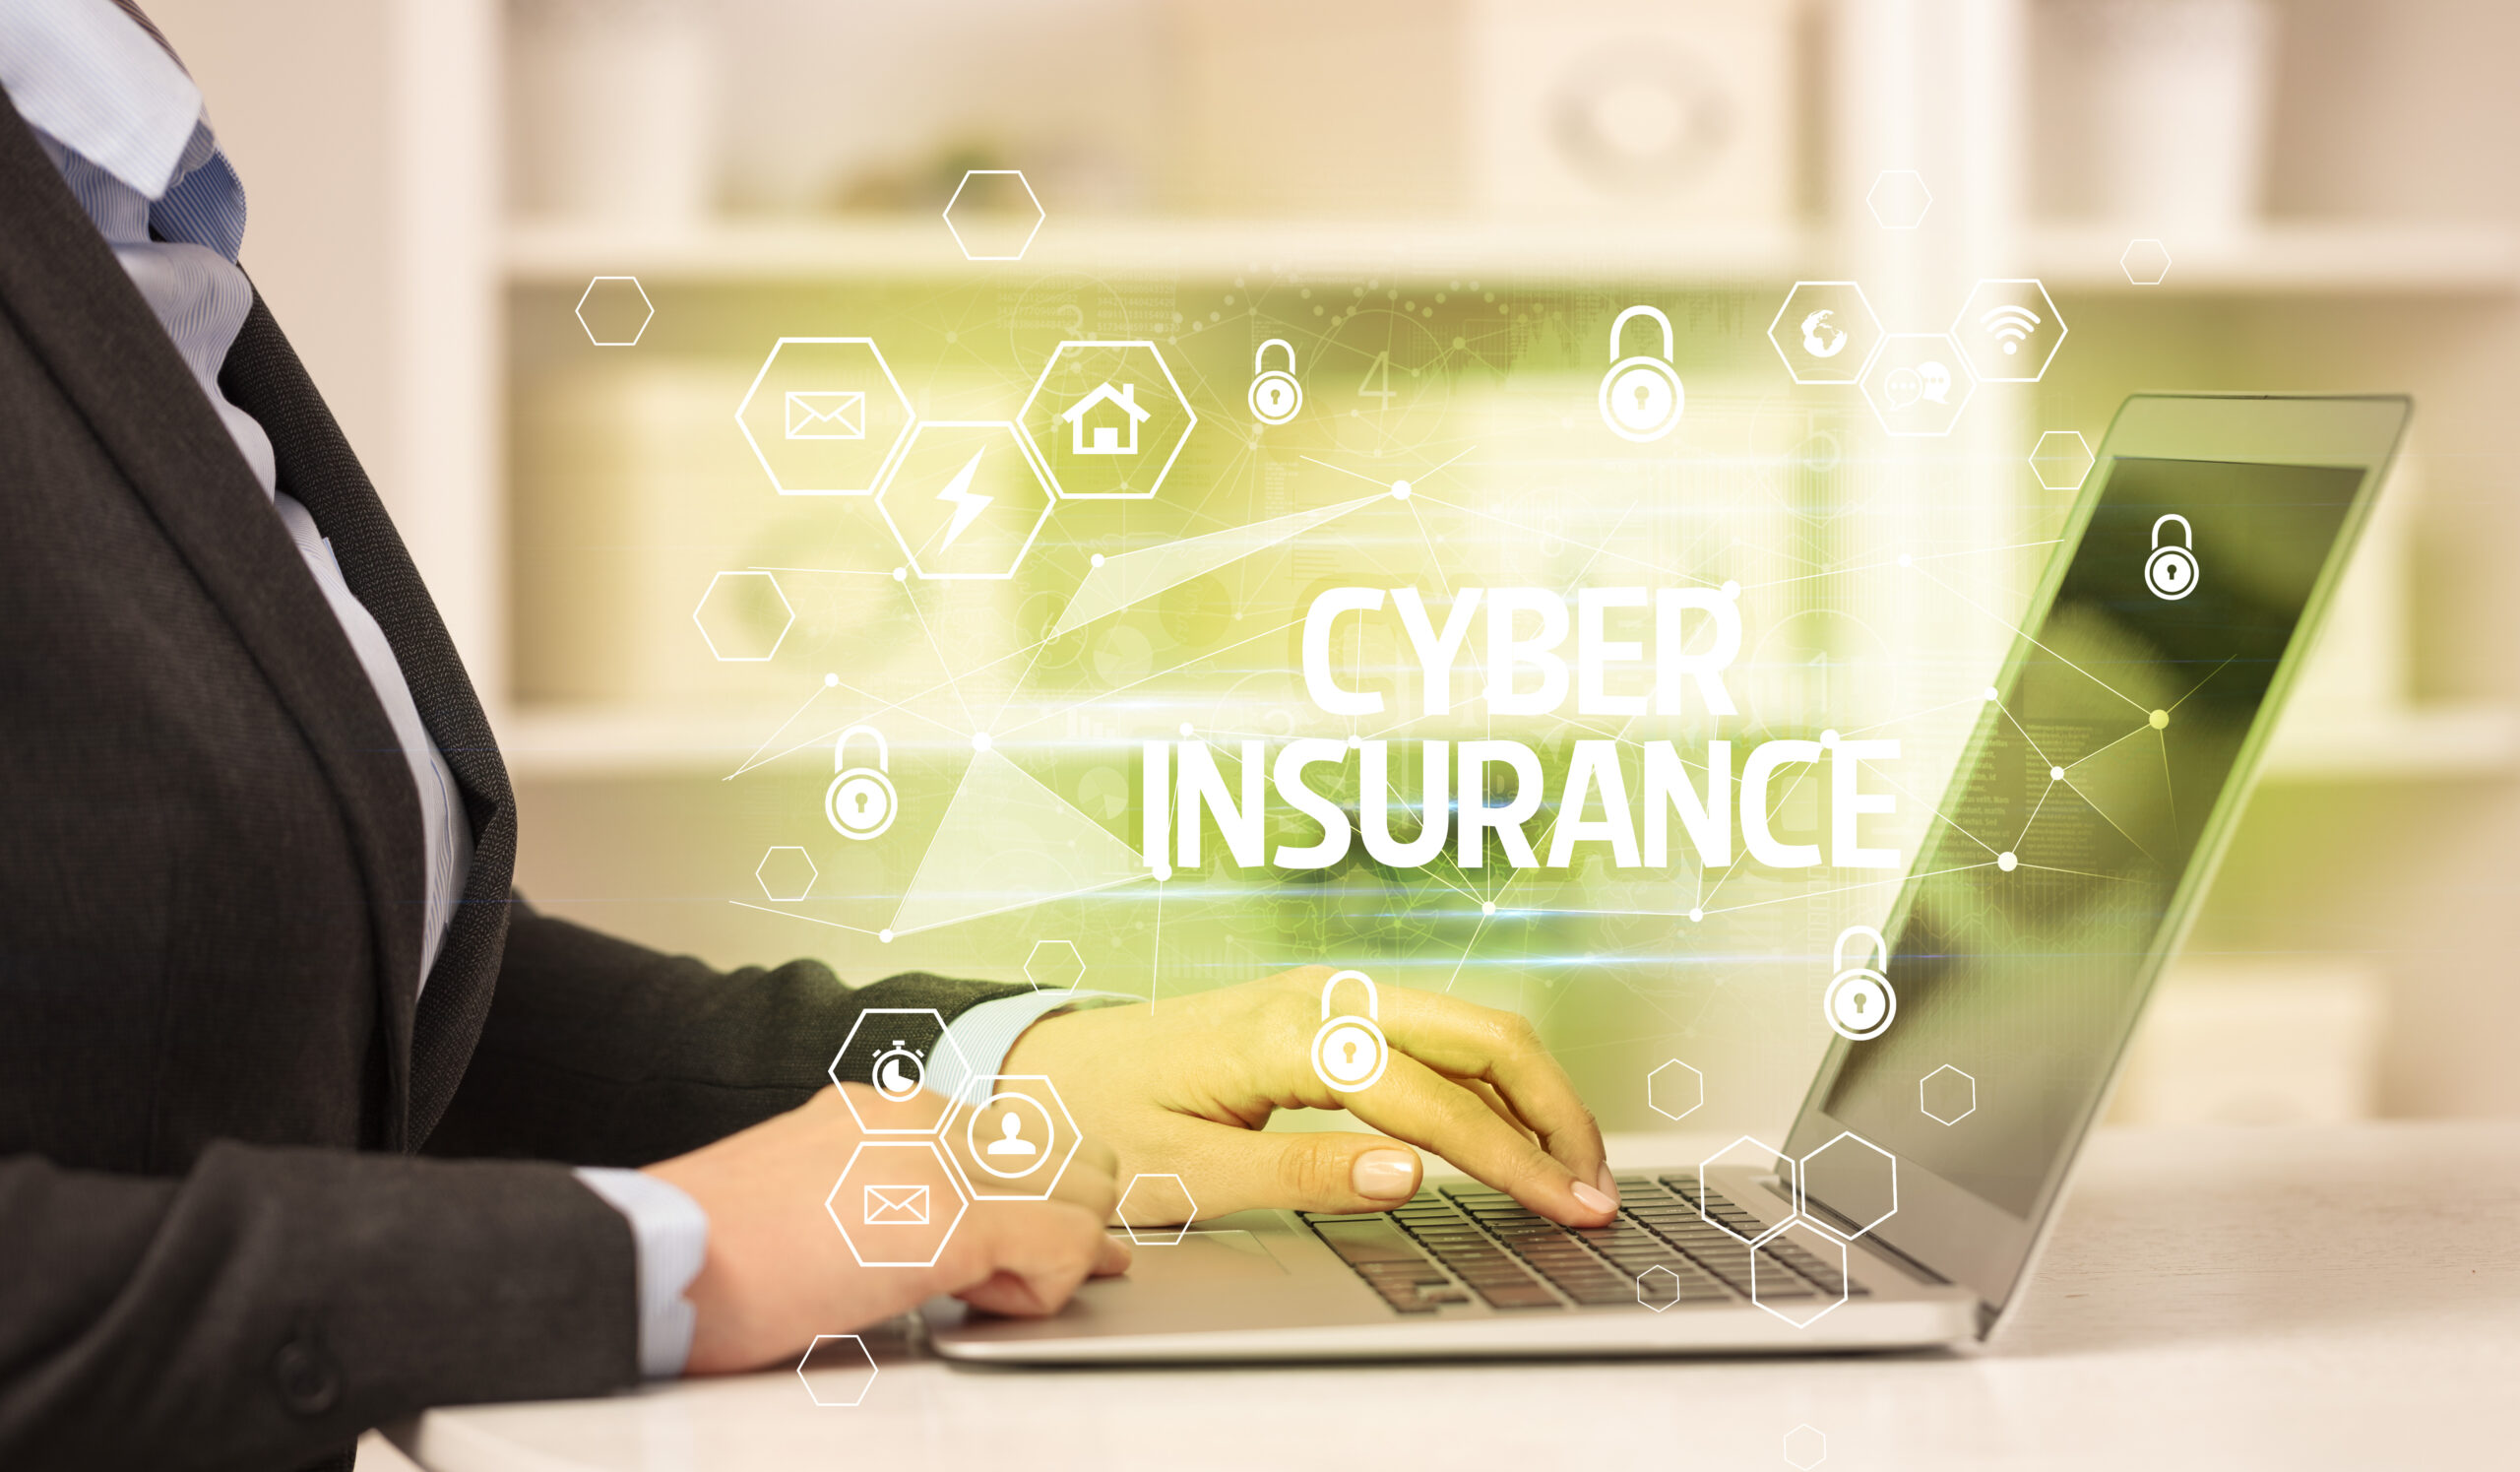 Cybersecurity insurance